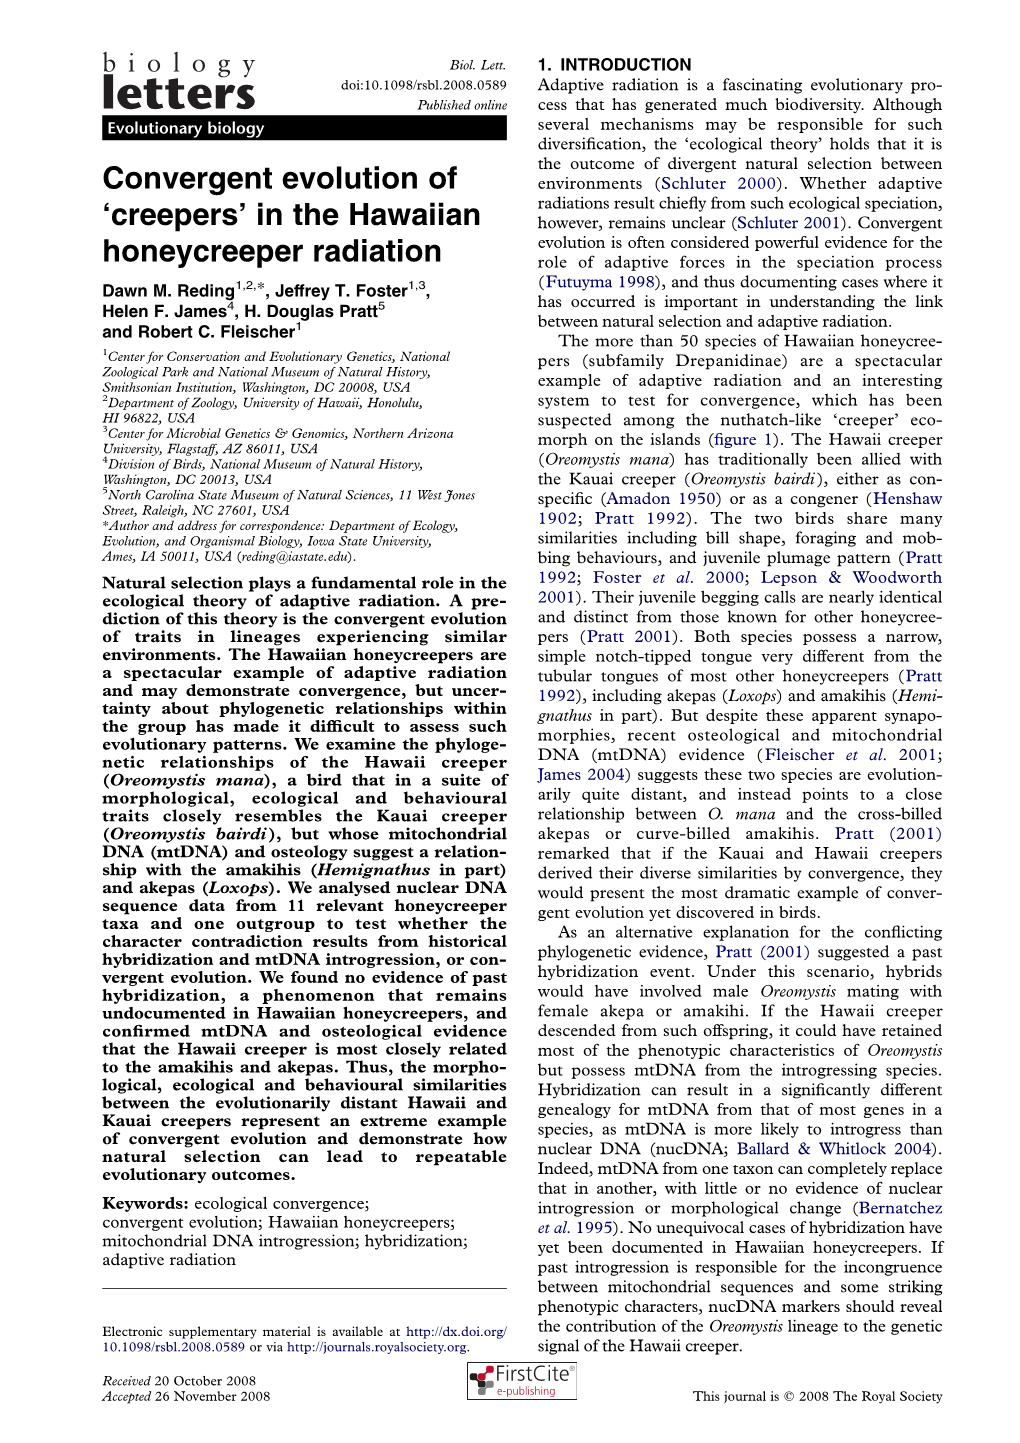 Convergent Evolution of 'Creepers' in the Hawaiian Honeycreeper Radiation